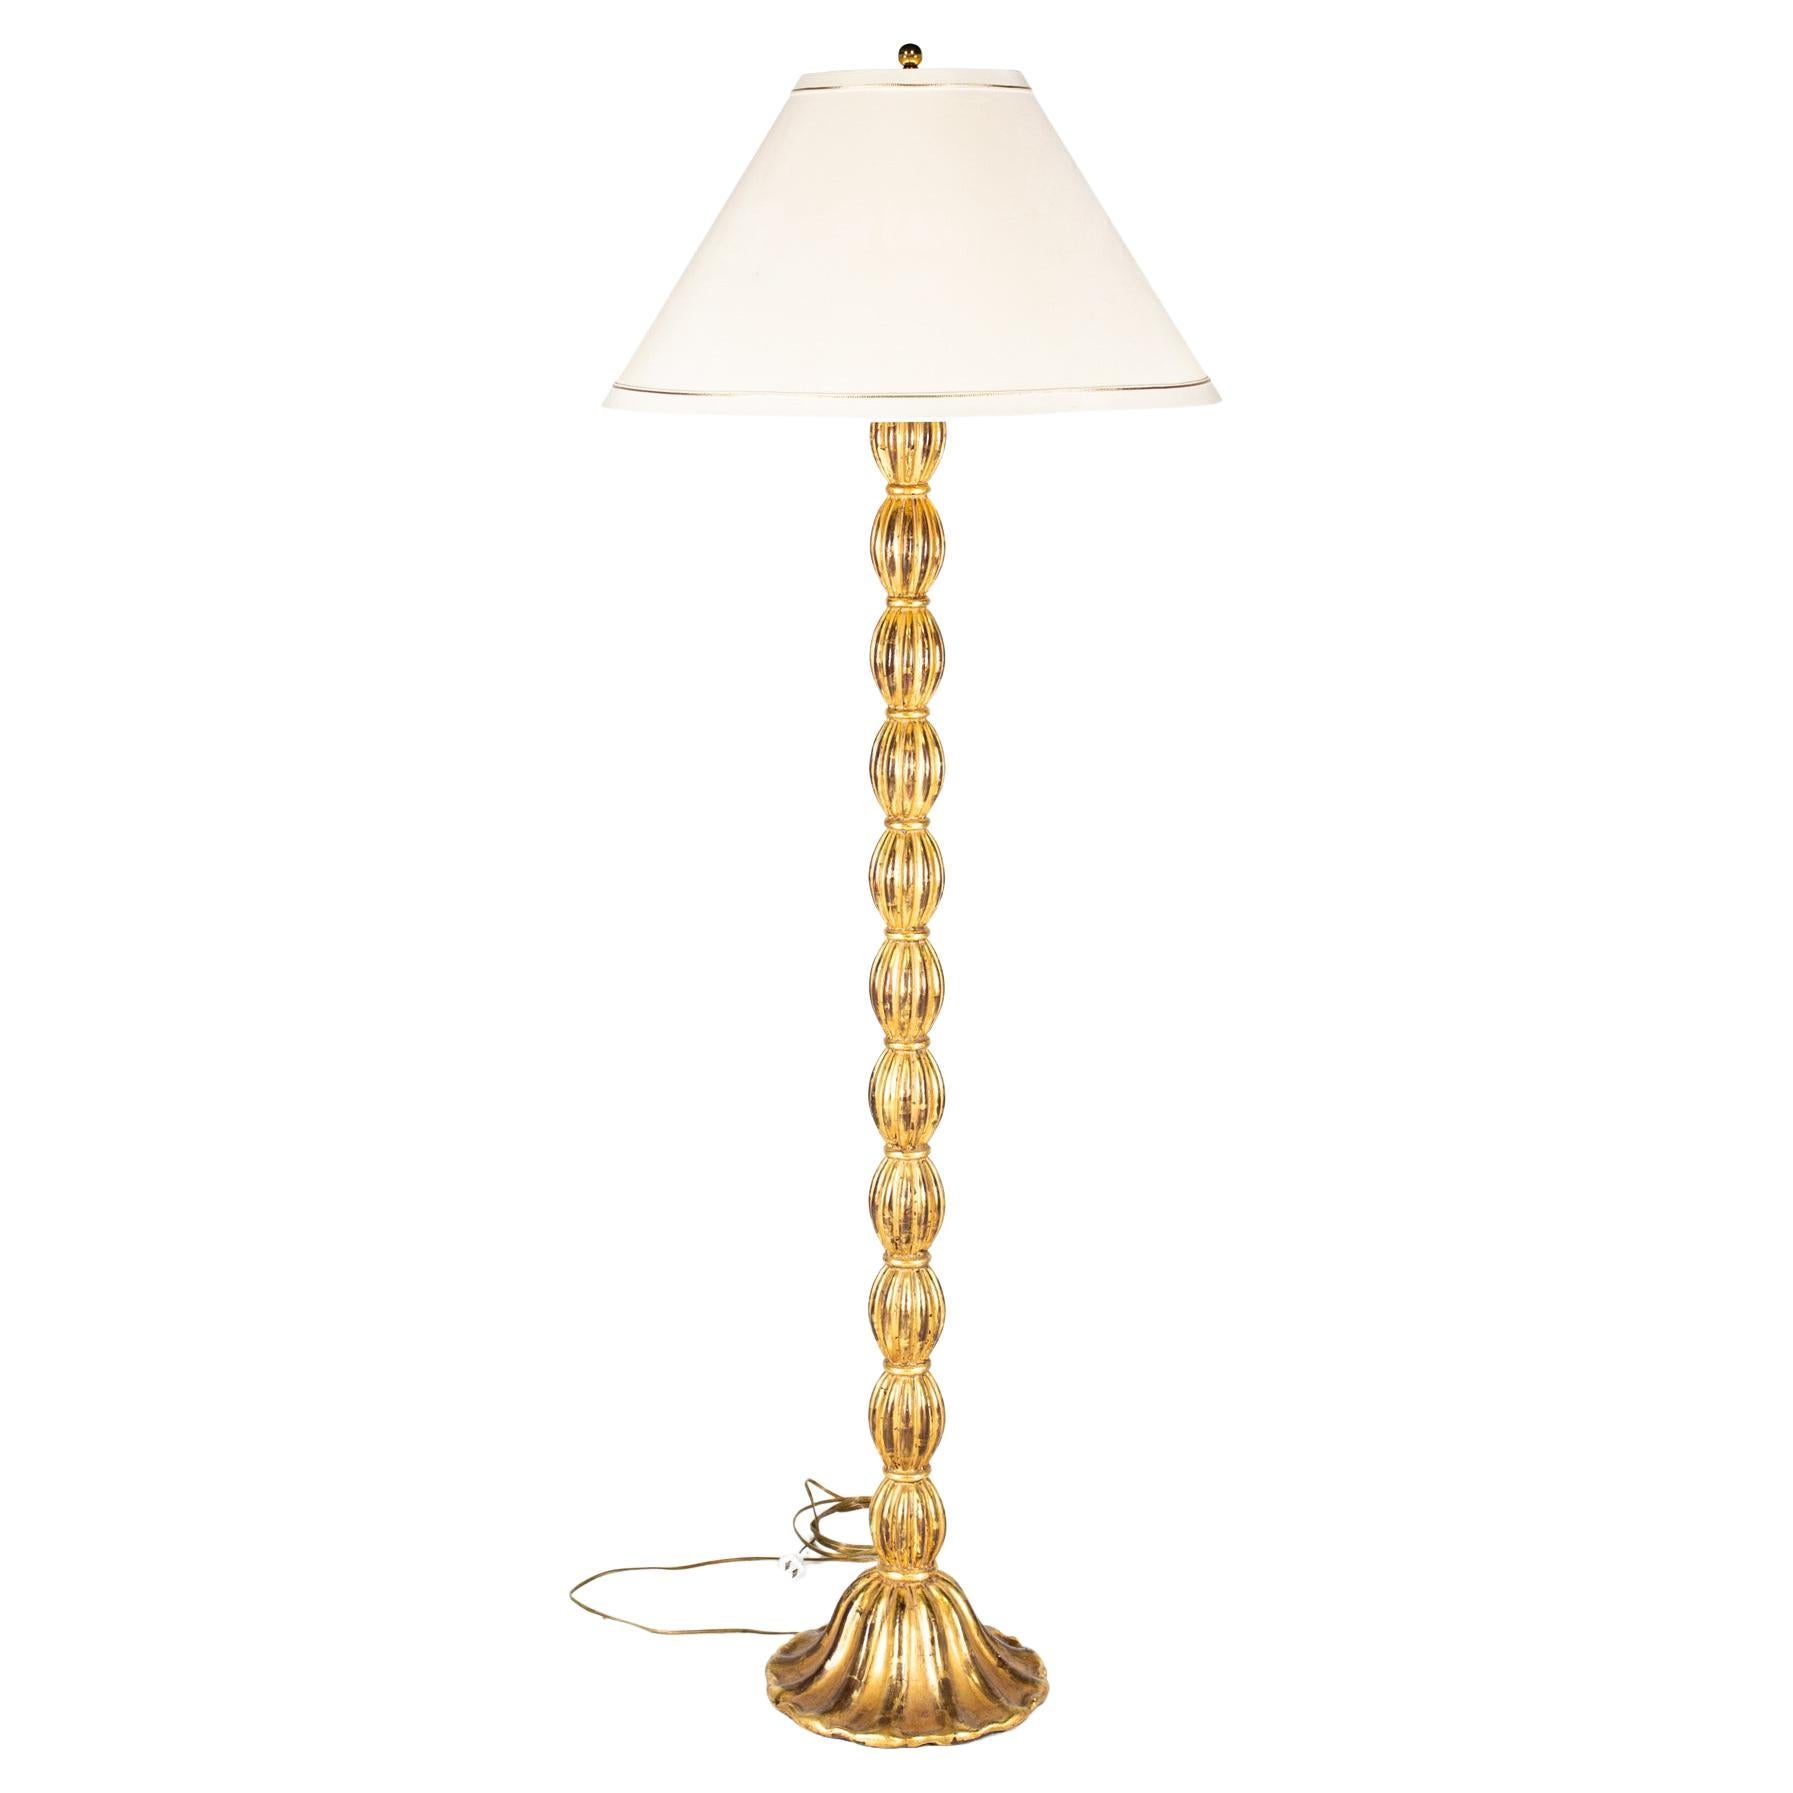 Antike, goldbemalte Stehlampe